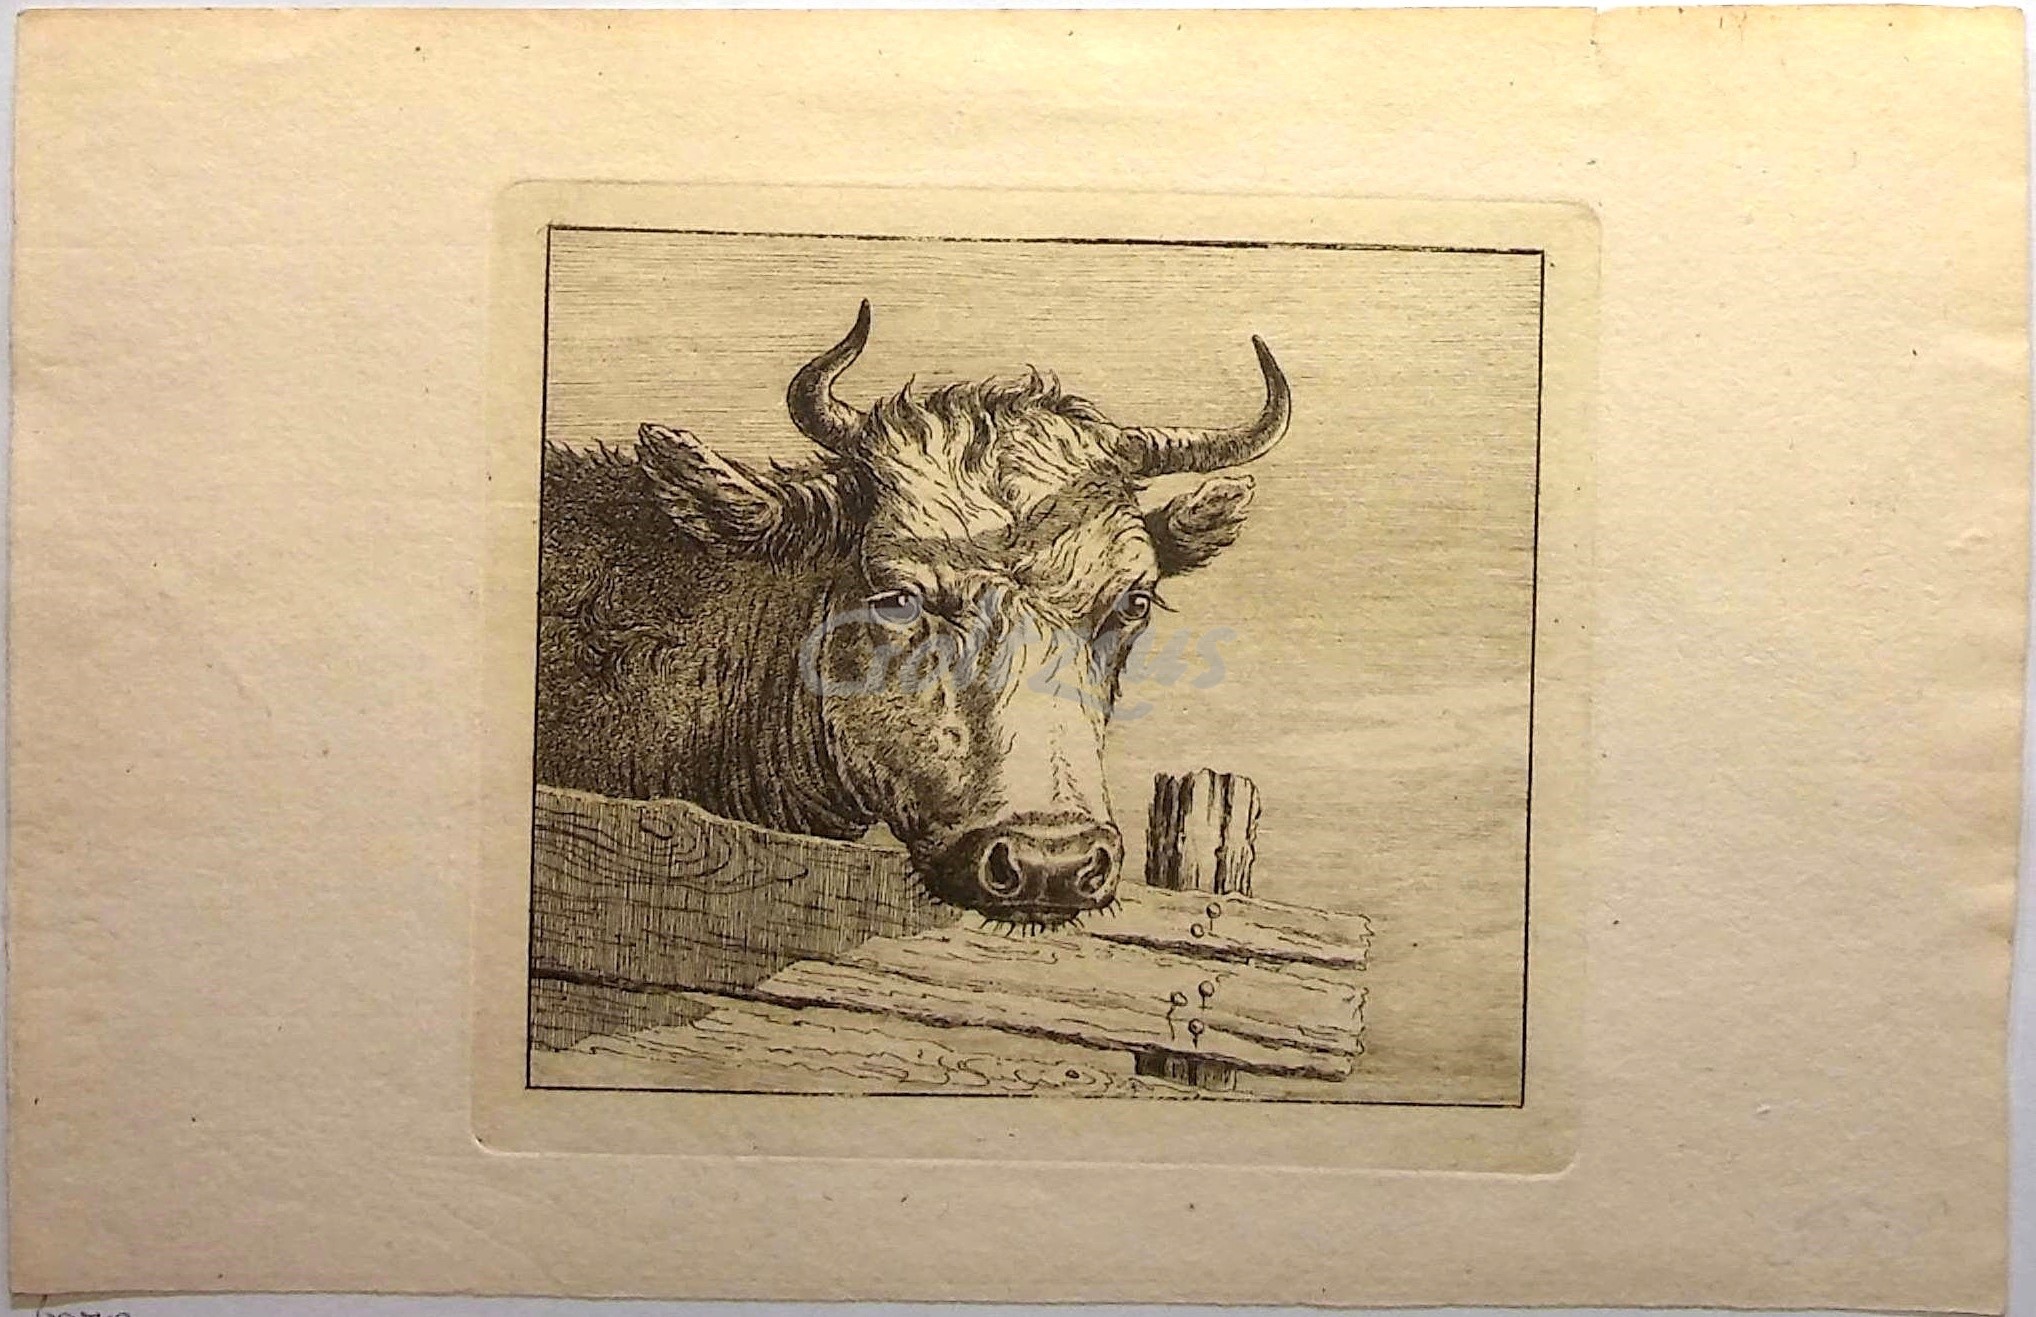 BAGELAAR, ERNST WILLEM JAN (1775-1837), Cow's head above fence